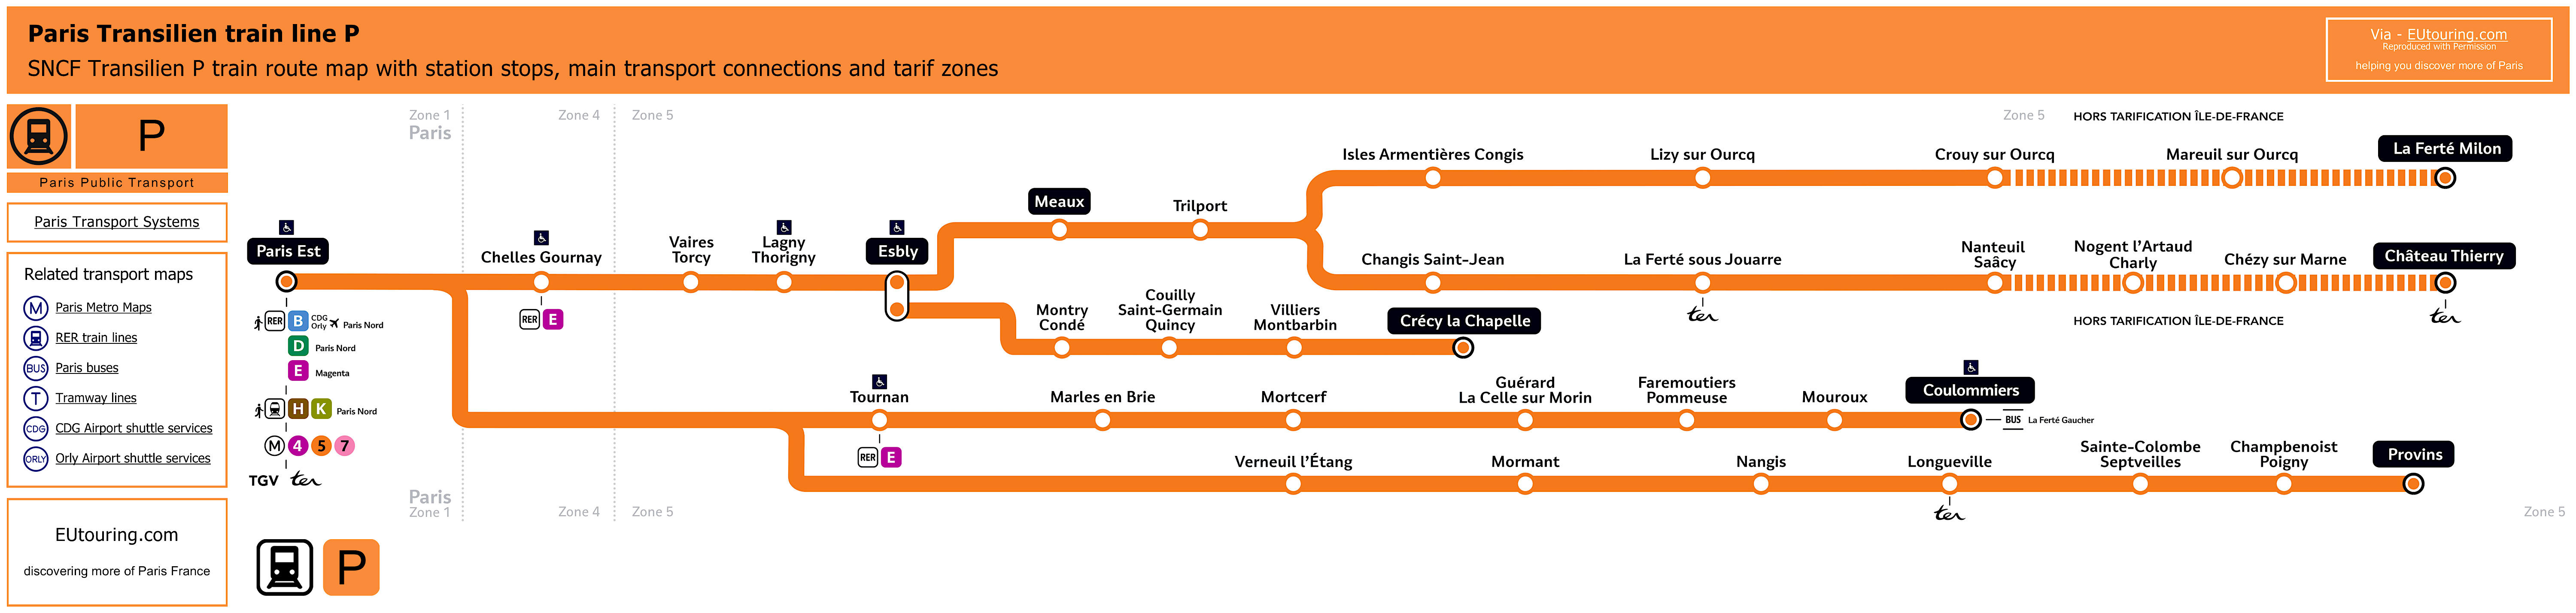 Sncf And Ratp Rer Train Maps For Paris And Ile De France | Hot Sex Picture